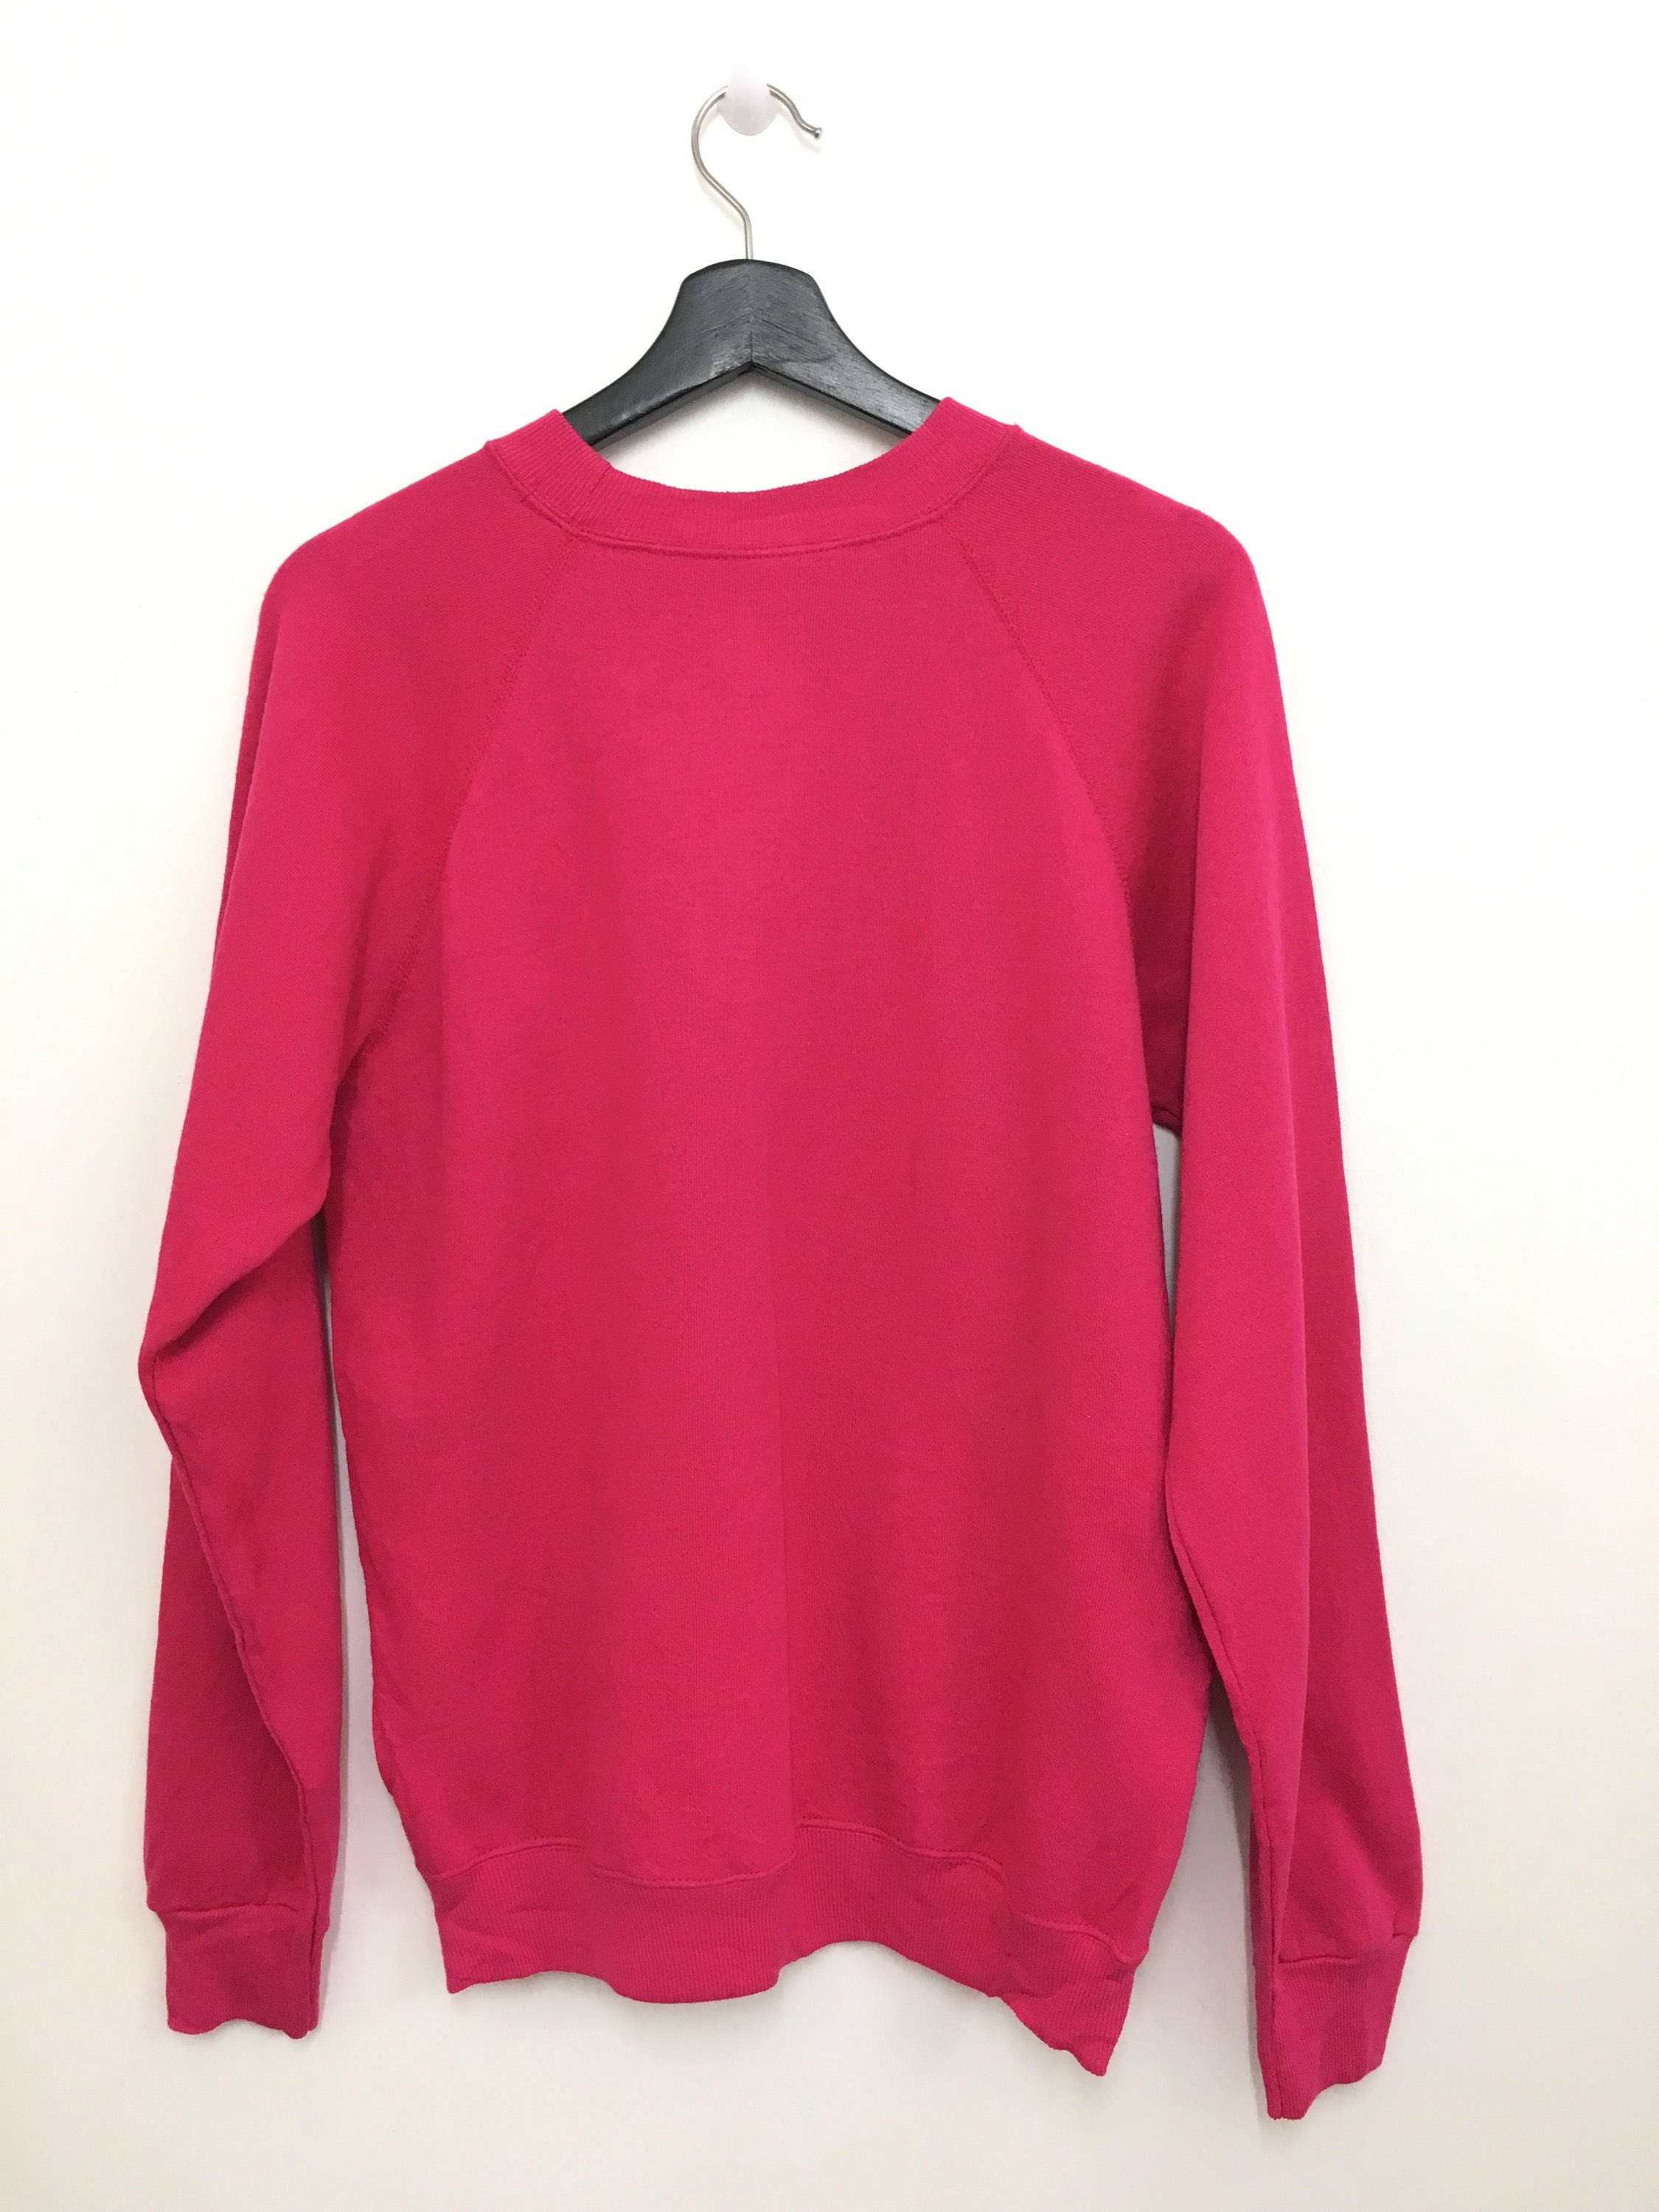 Very Rare Vintage 80s LAS VEGAS Sweater Sweatshirt Pullover - Etsy